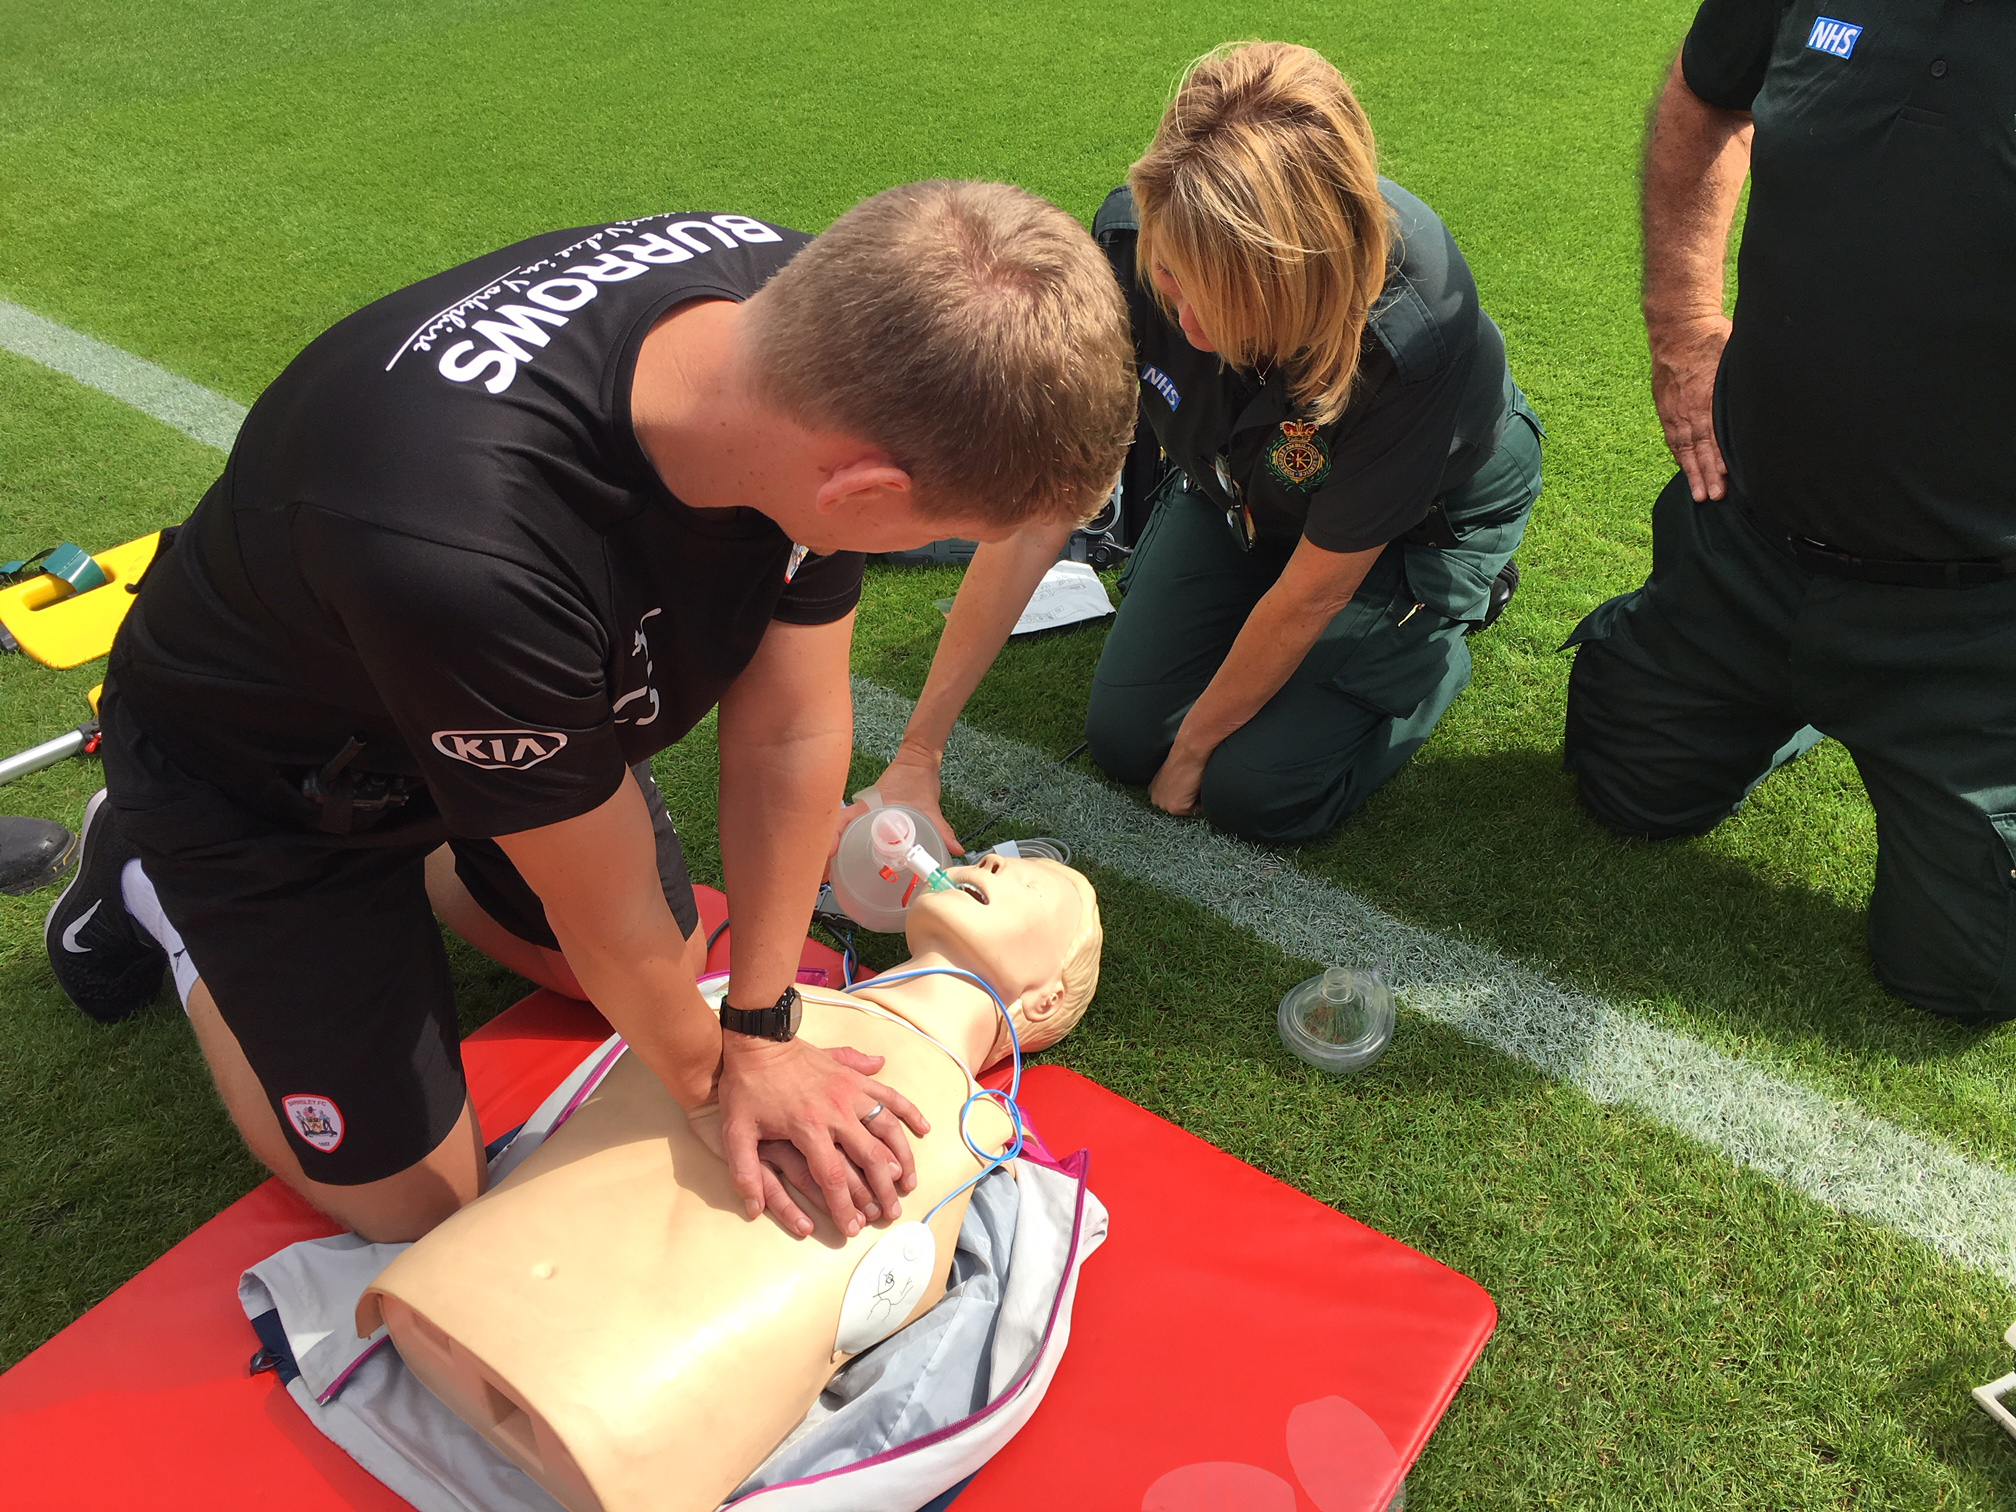 CPR training at Barnsley Football Club